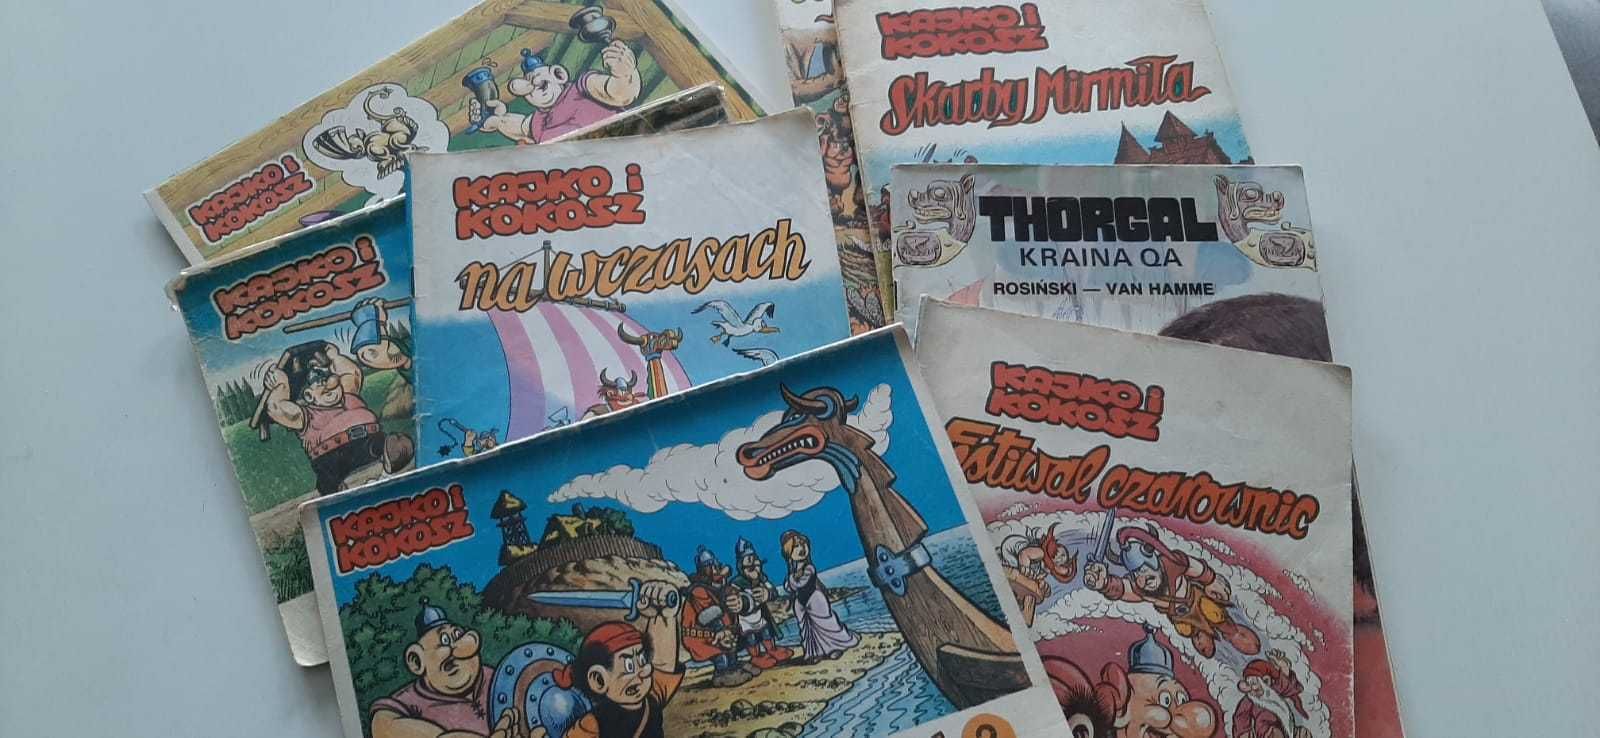 Stare Komiksy z PRL - Kajko i Kokosz (7sztuk) oraz Thorgal (1 sztuka)